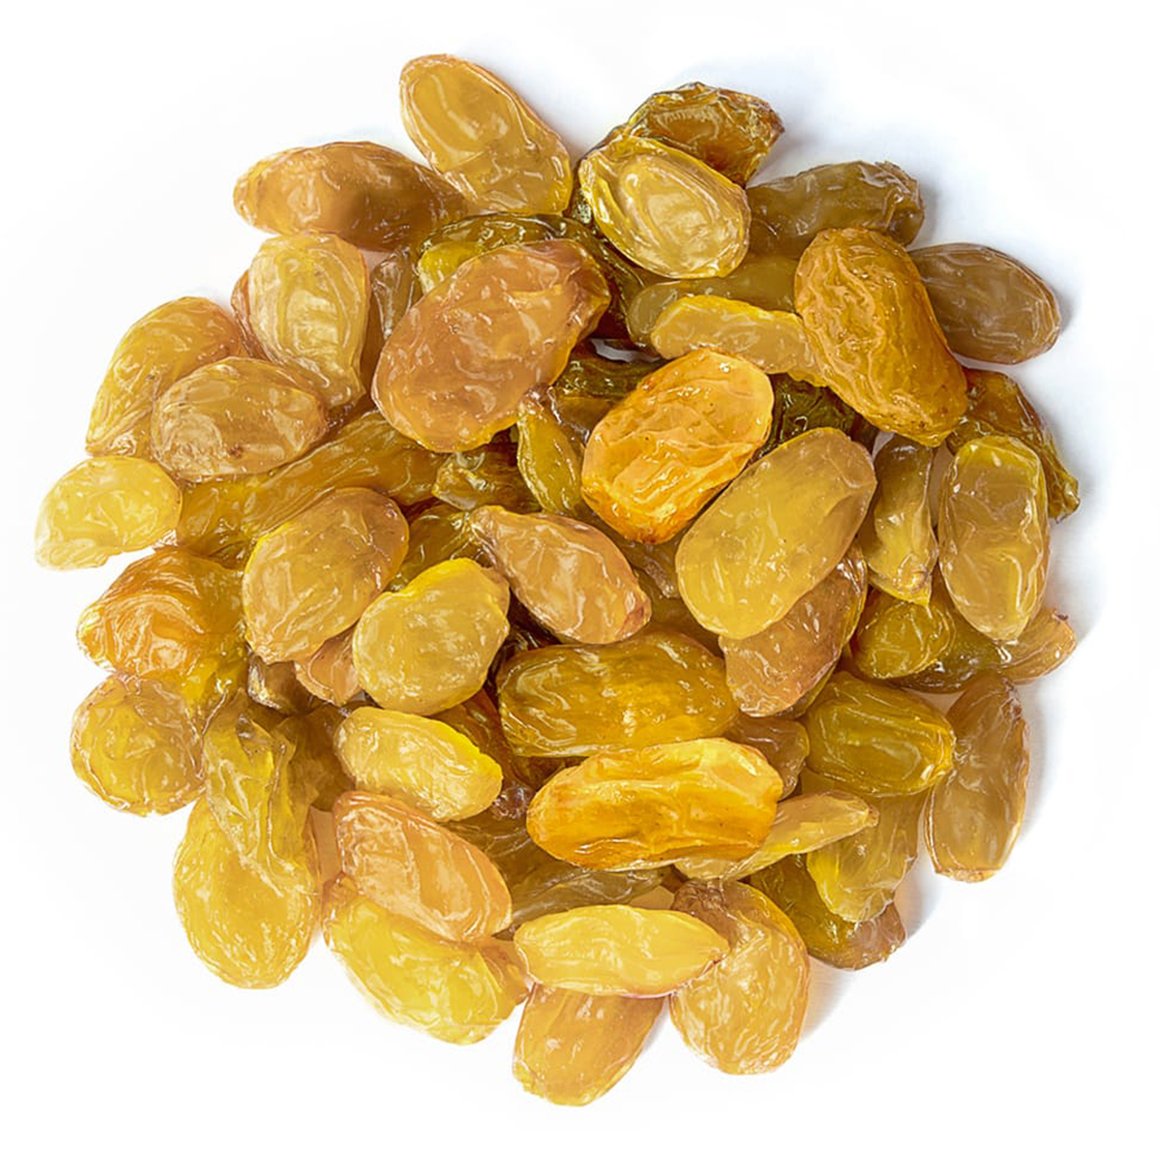 Golden-Raisins-Main